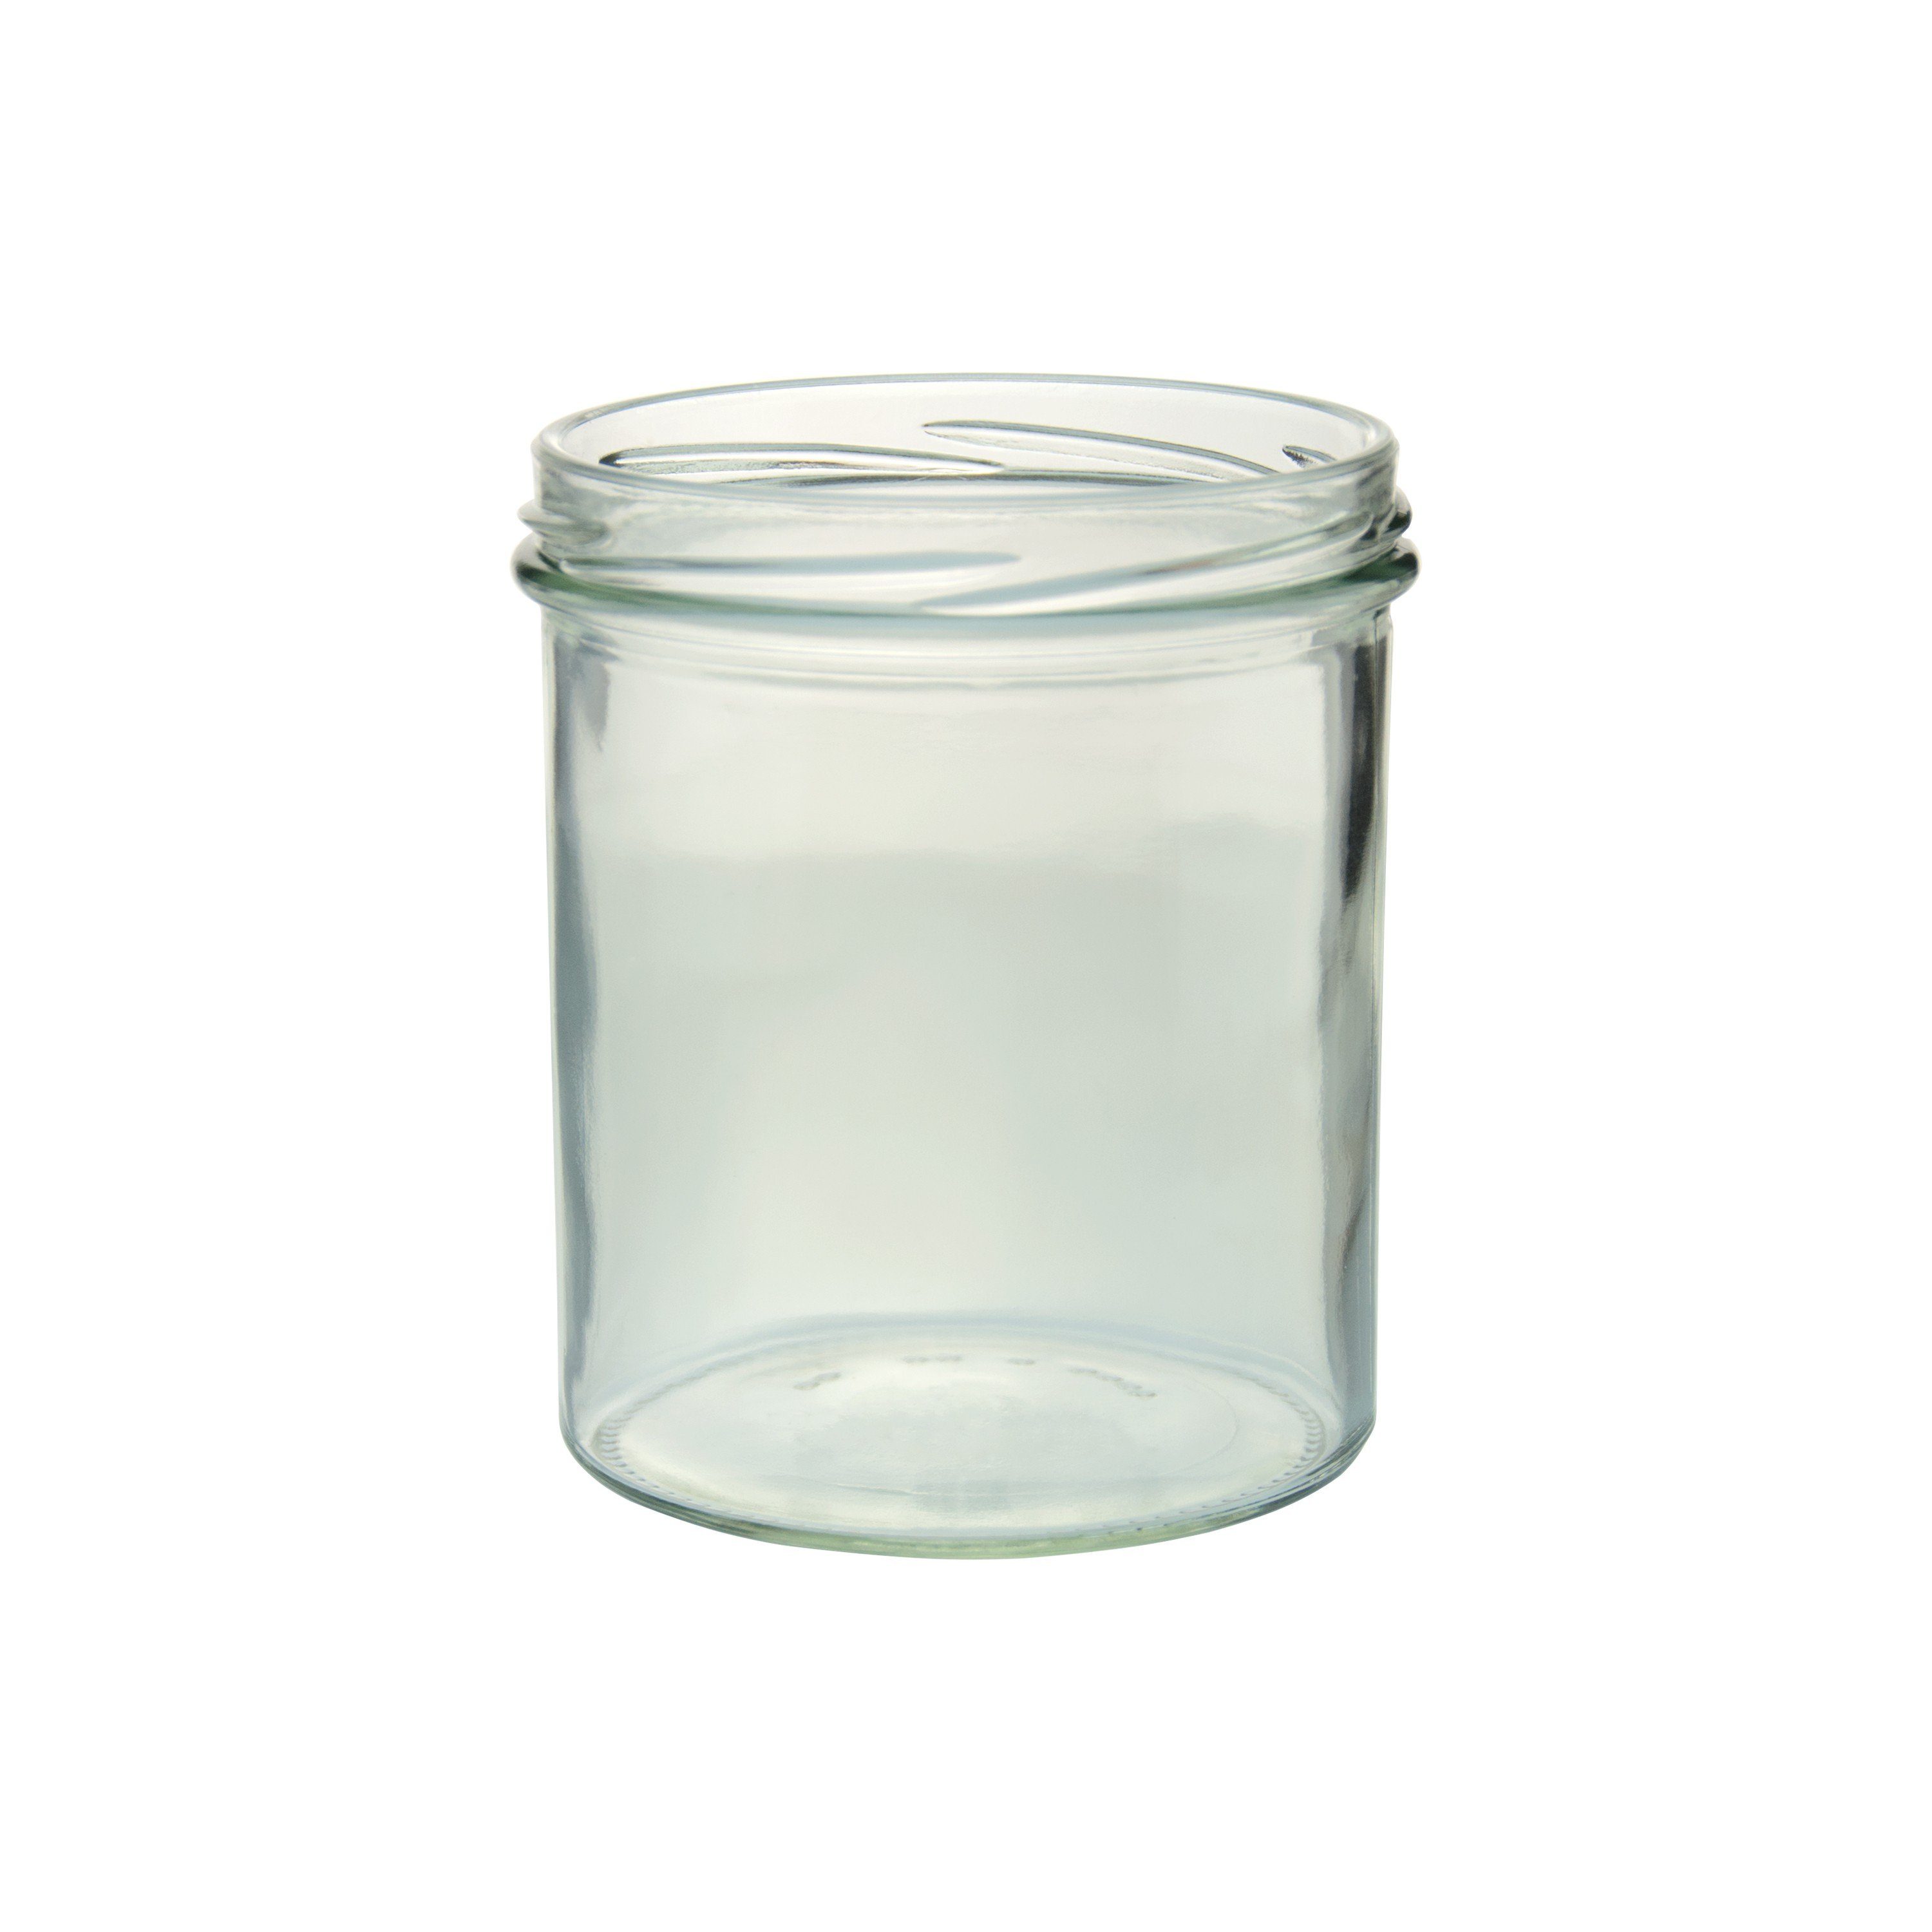 350 12er silberner Einmachglas Set MamboCat Glas Deckel, ml Sturzglas Einmachglas Marmeladenglas